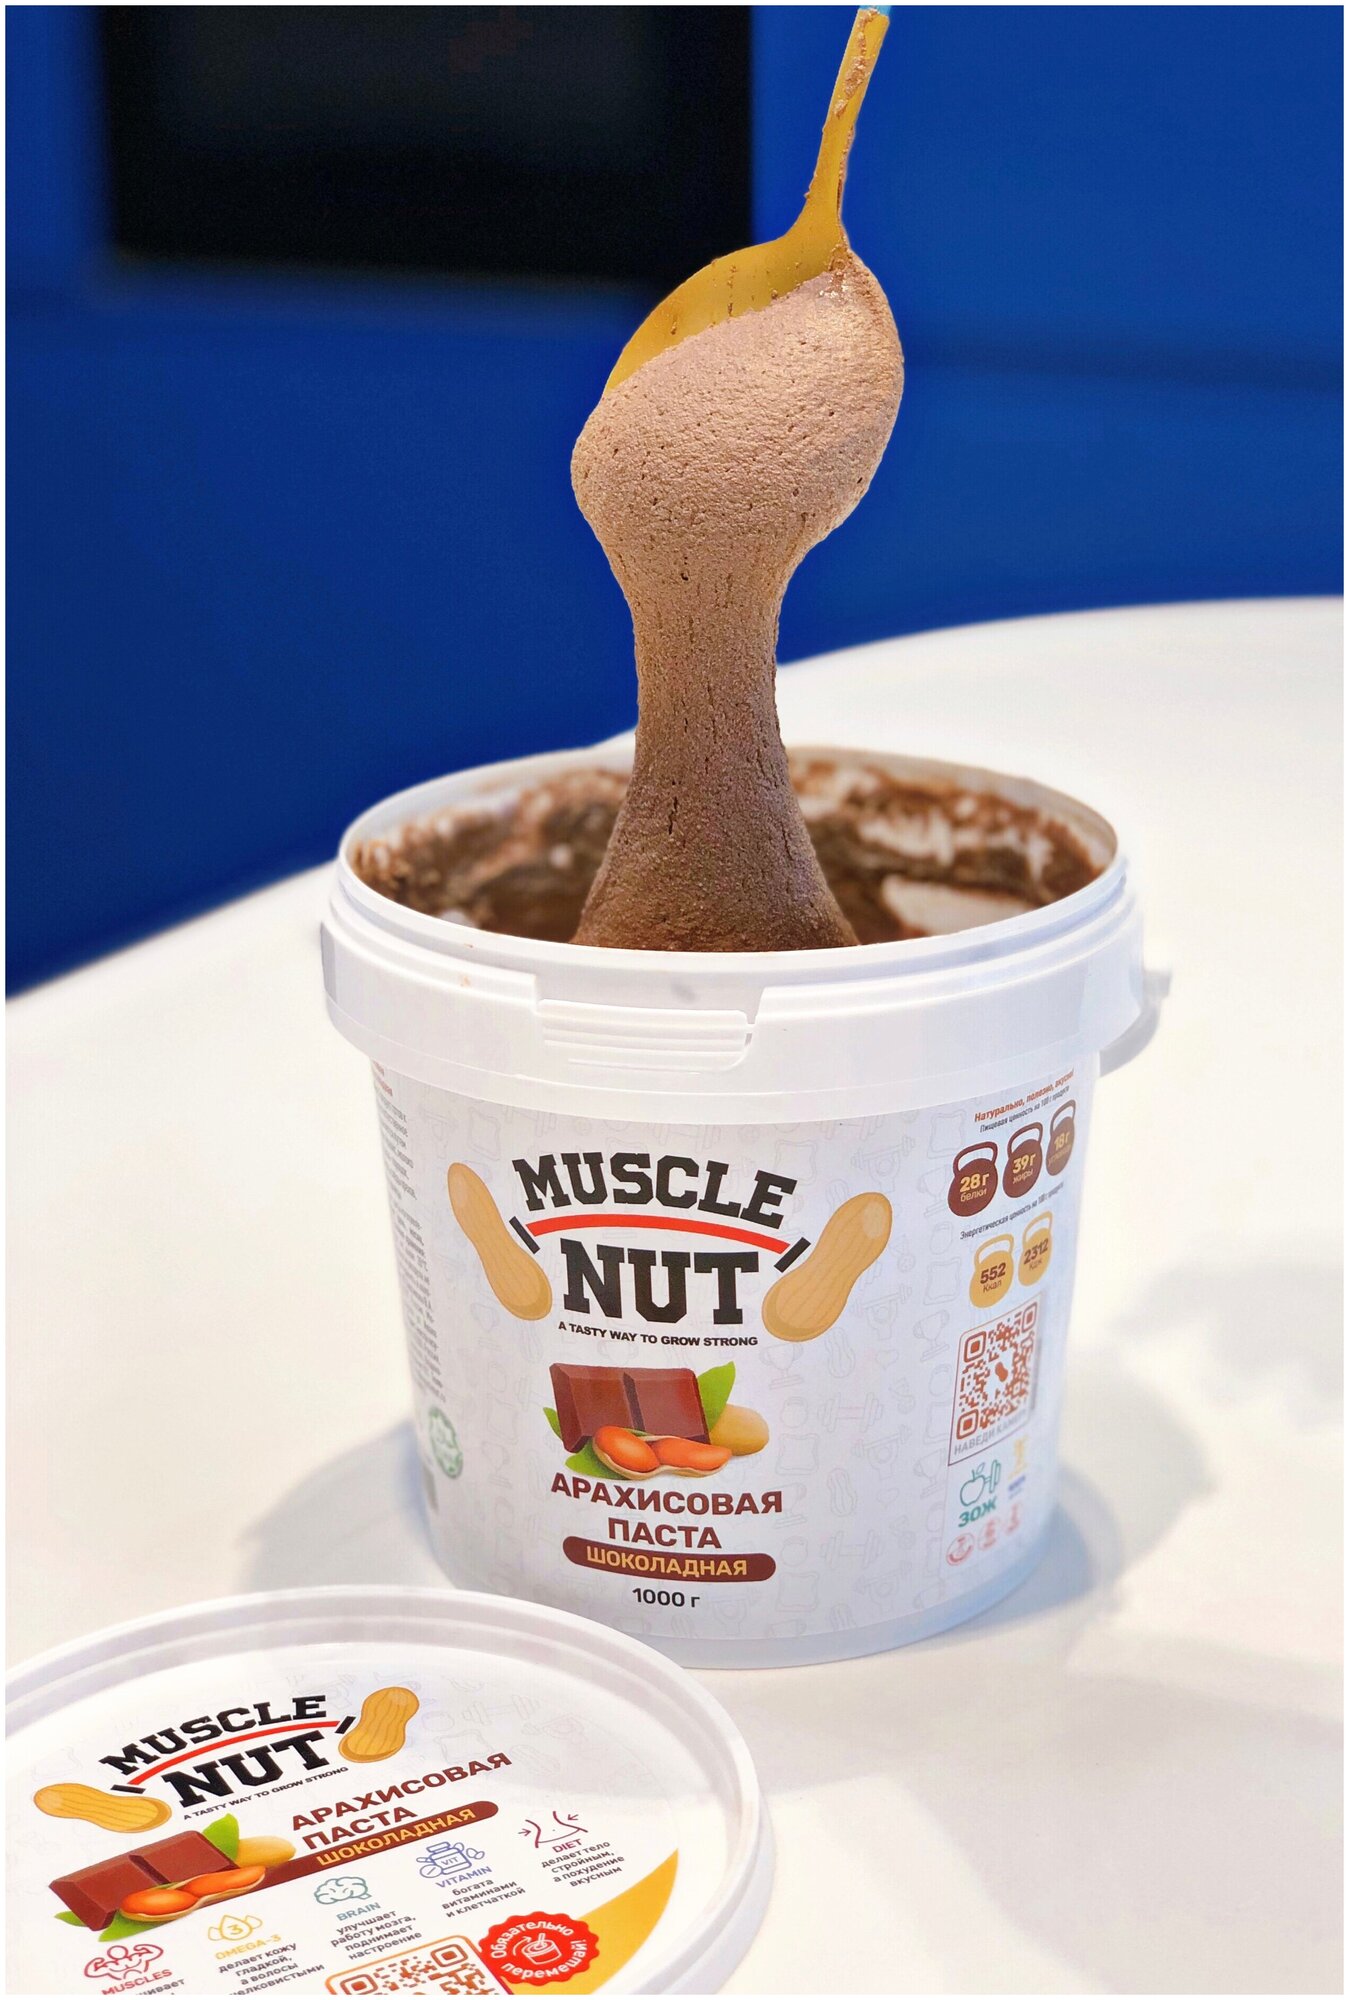 Арахисовая паста Muscle Nut шоколадная, без сахара, натуральная, высокобелковая, 300 г - фотография № 6